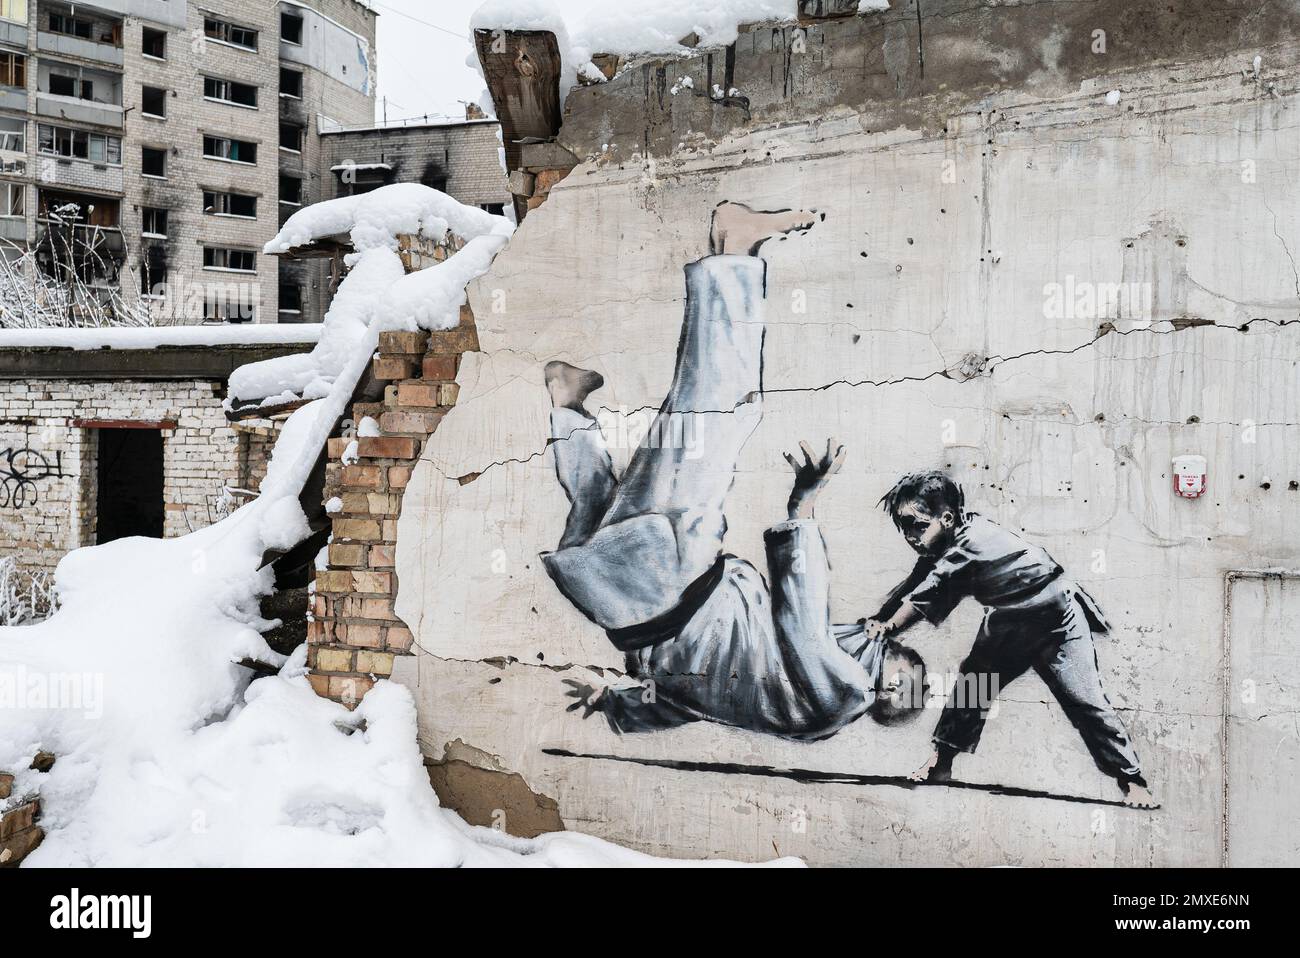 Borodyanka, Ukraine - Banksy graffiti on the wall Stock Photo